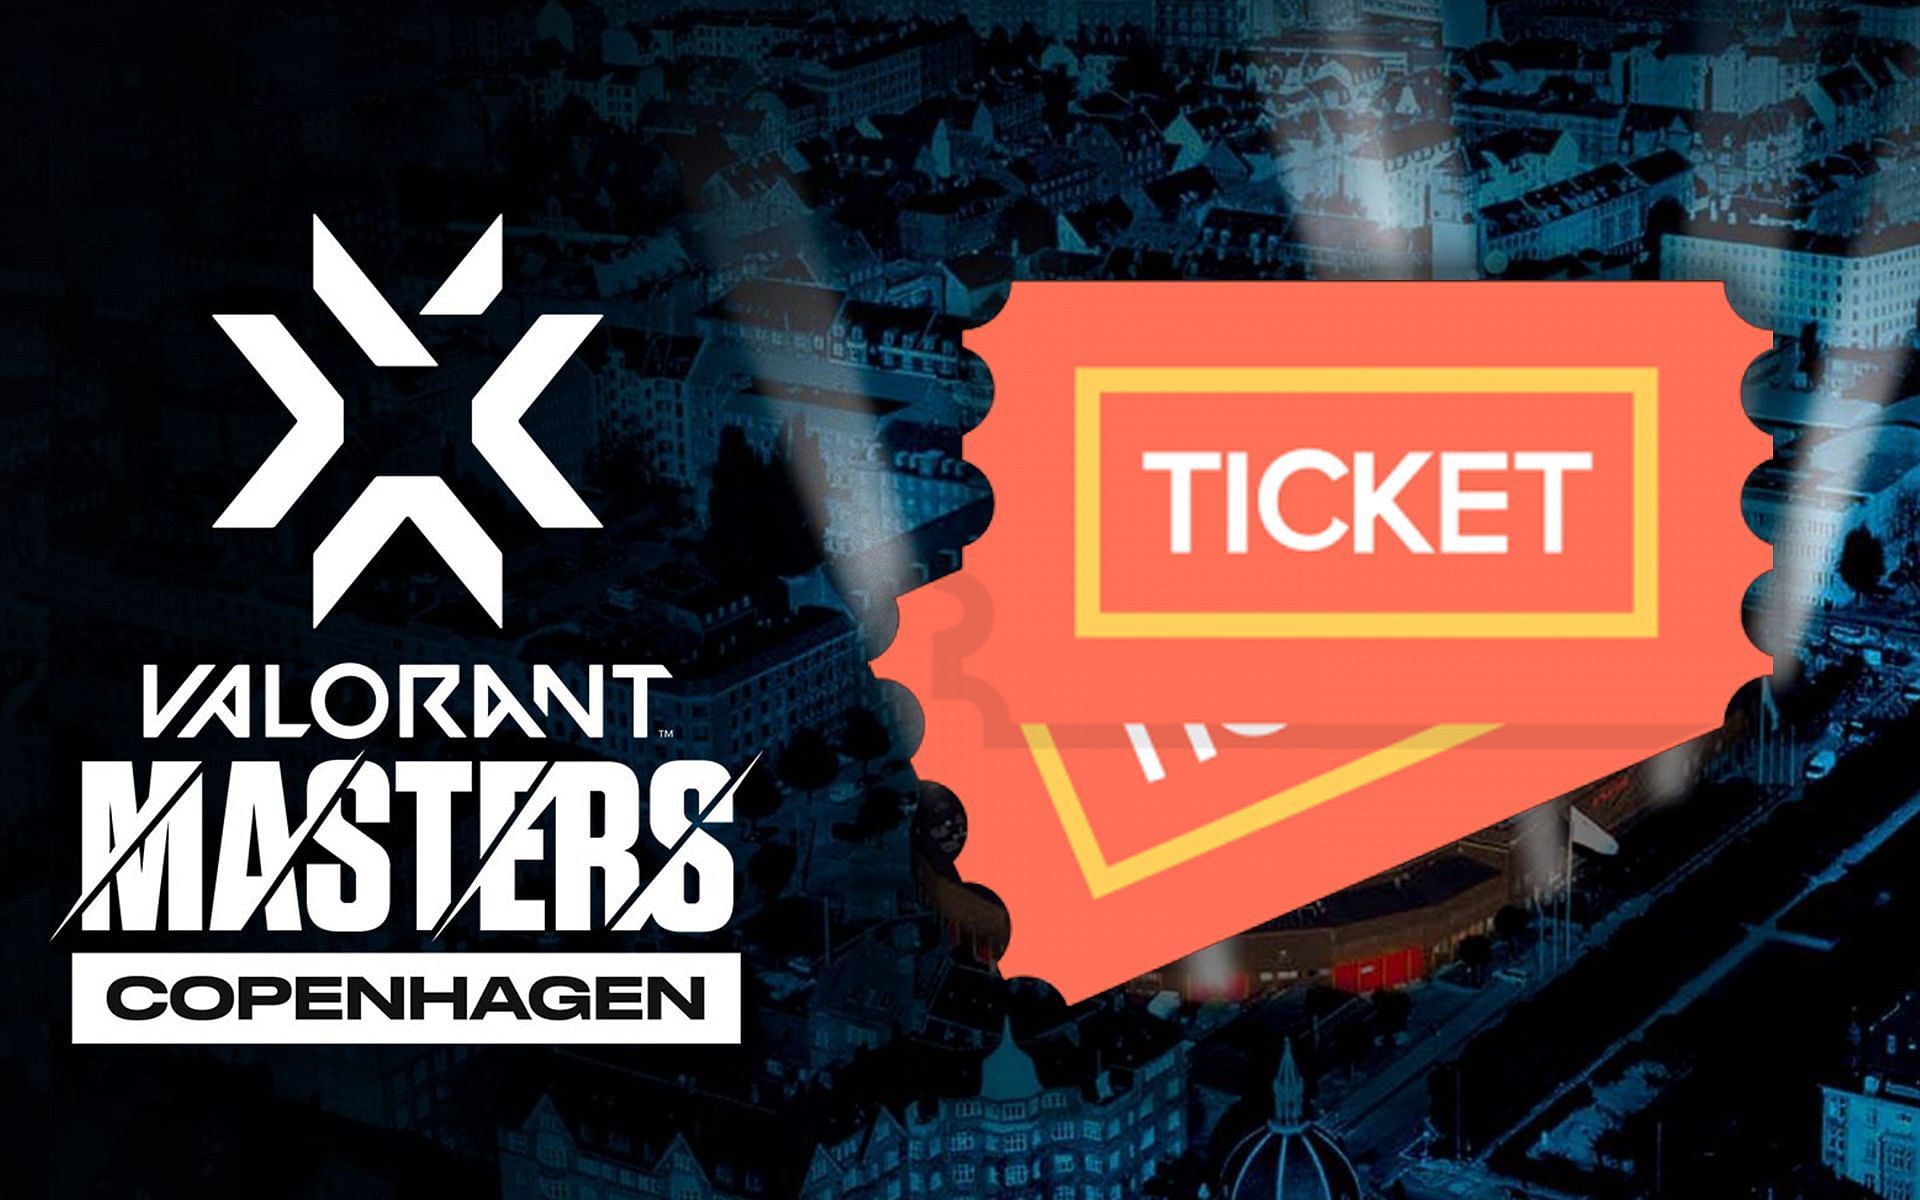 VCT Stage 2 Copenhagen ticket booking information (Image via Riot Games)